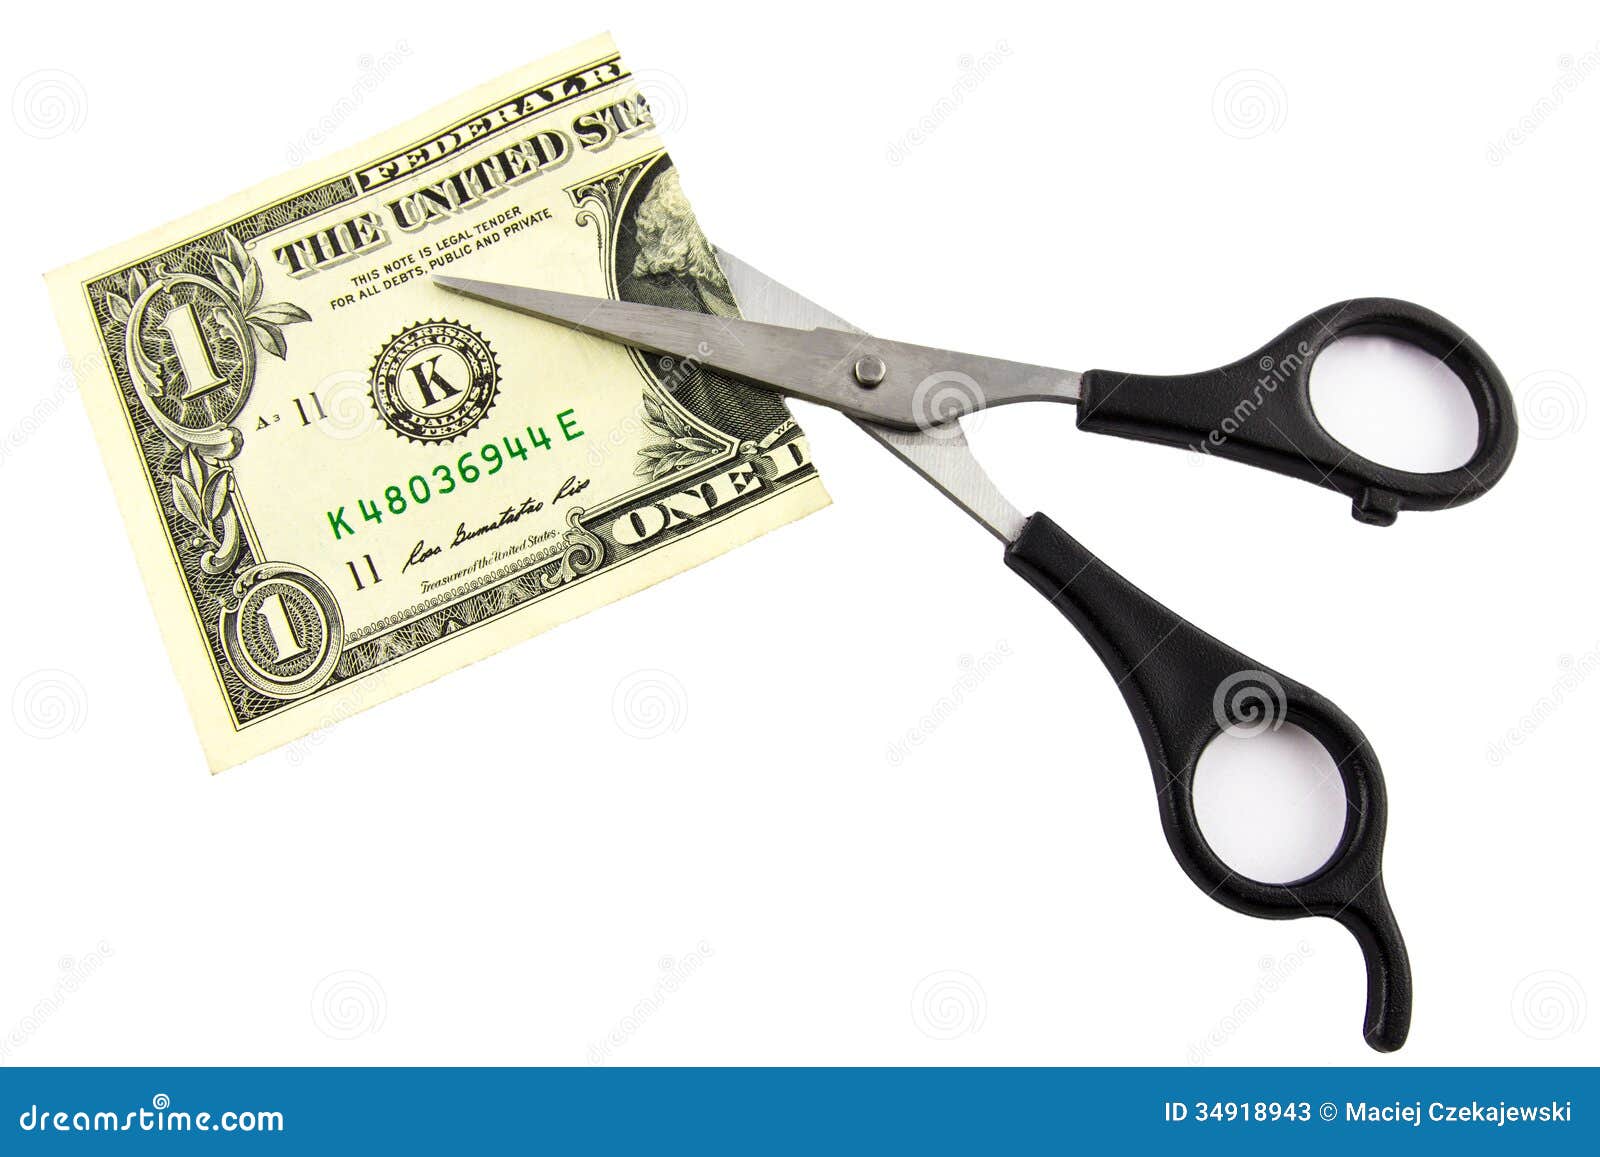 one-dollar-cut-half-scissors-isolated-white-background-34918943.jpg